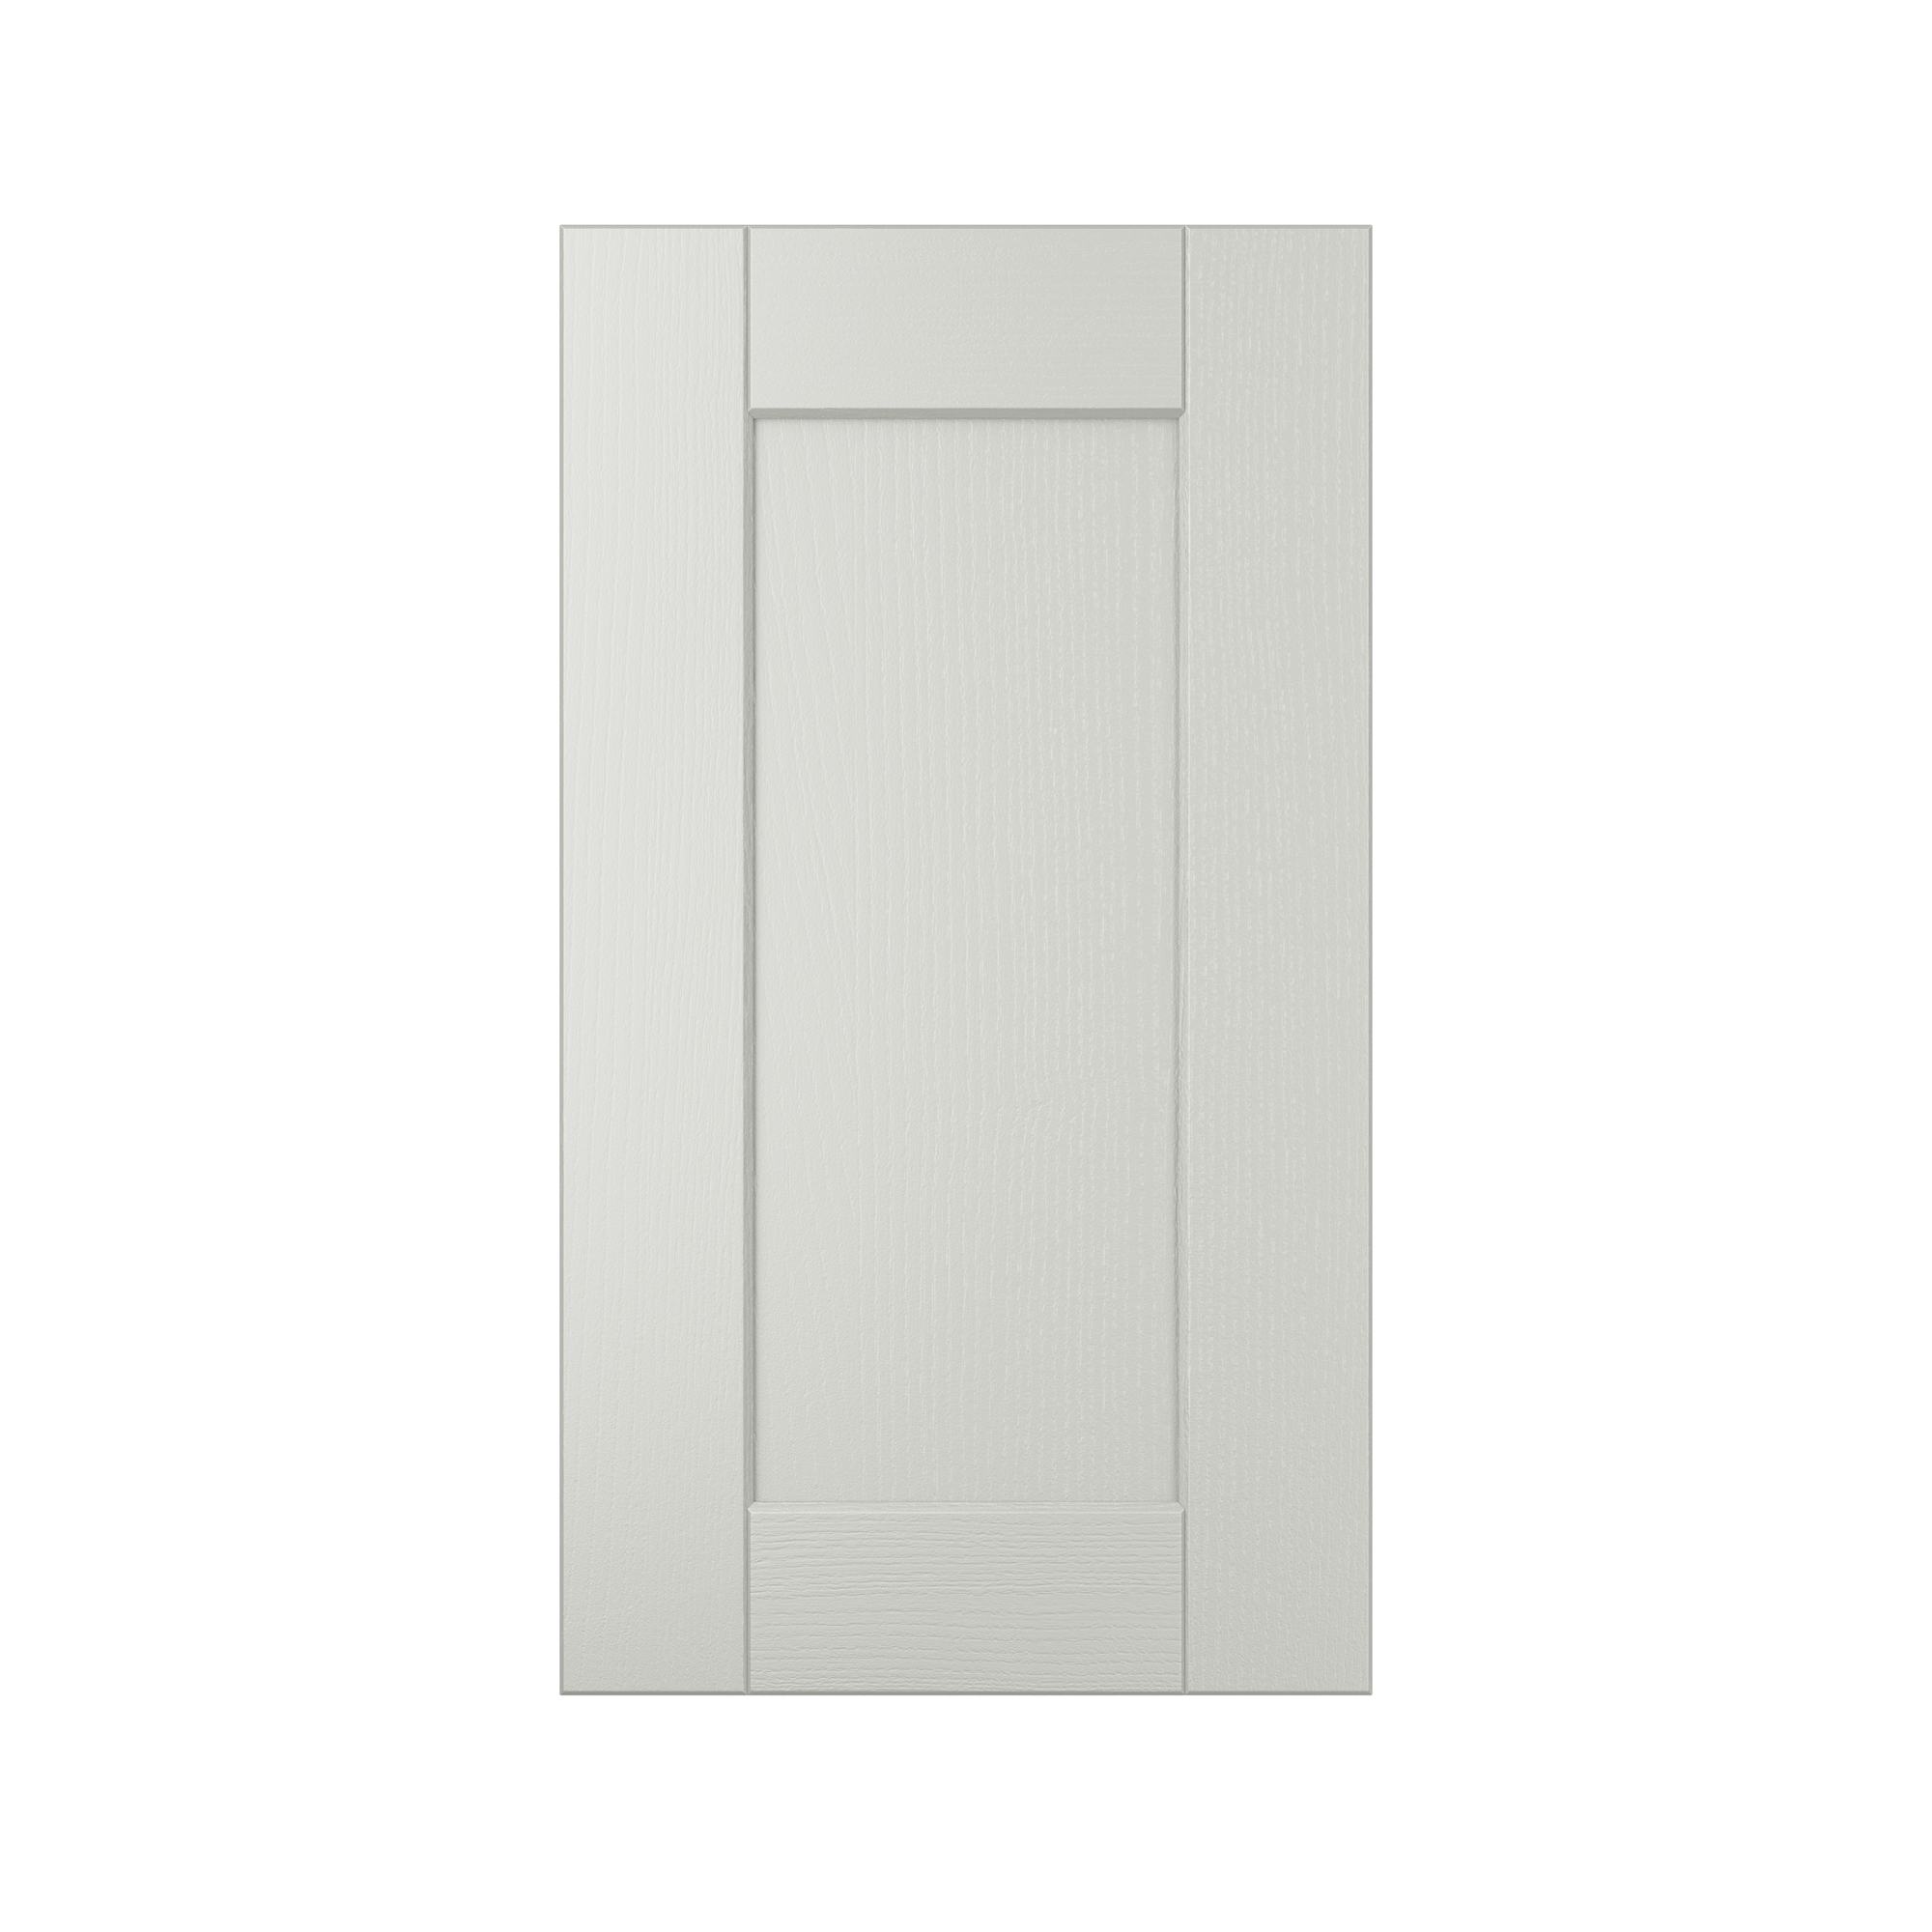 895 X 497 - Kensington Light Grey